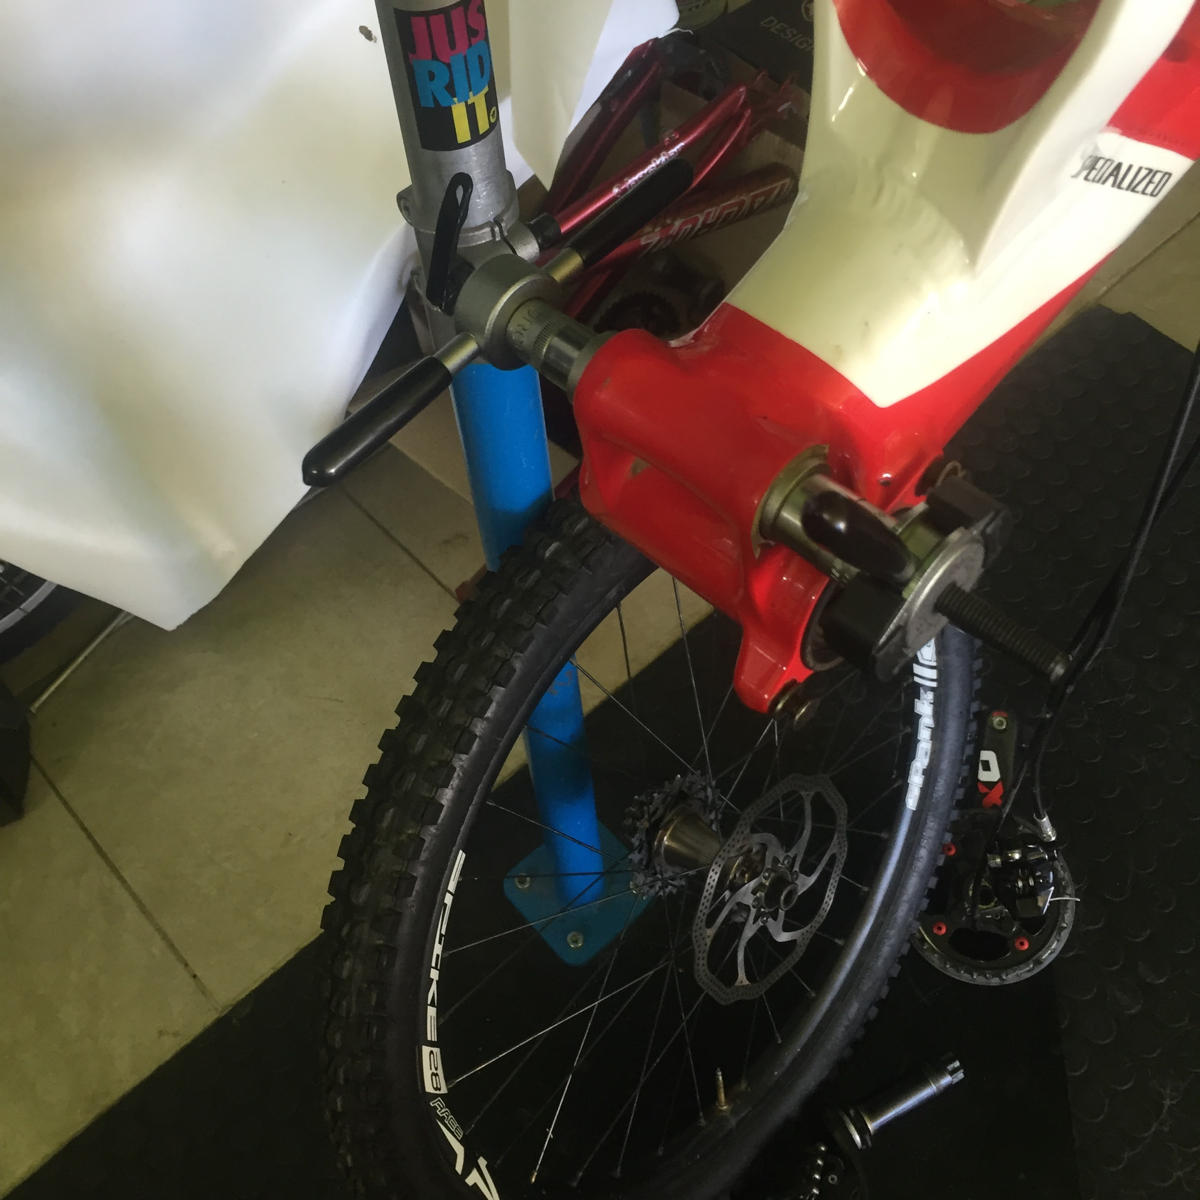 dim-bikes-workplace-installing-bearings